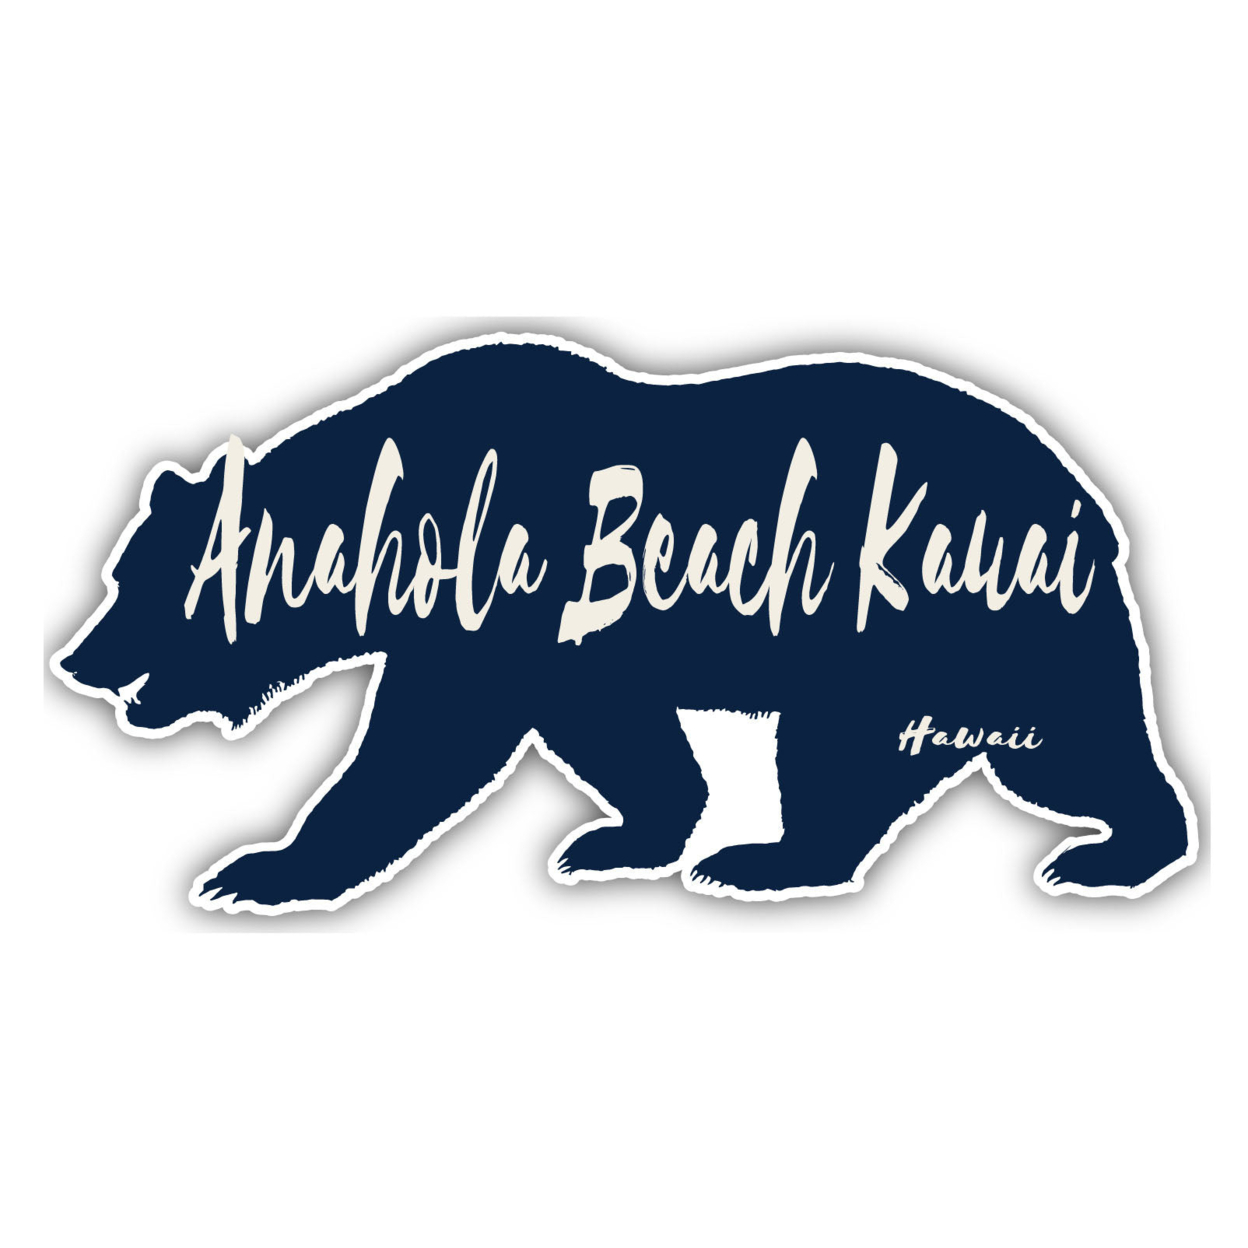 Anahola Beach Kauai Hawaii Souvenir Decorative Stickers (Choose Theme And Size) - 4-Pack, 4-Inch, Bear